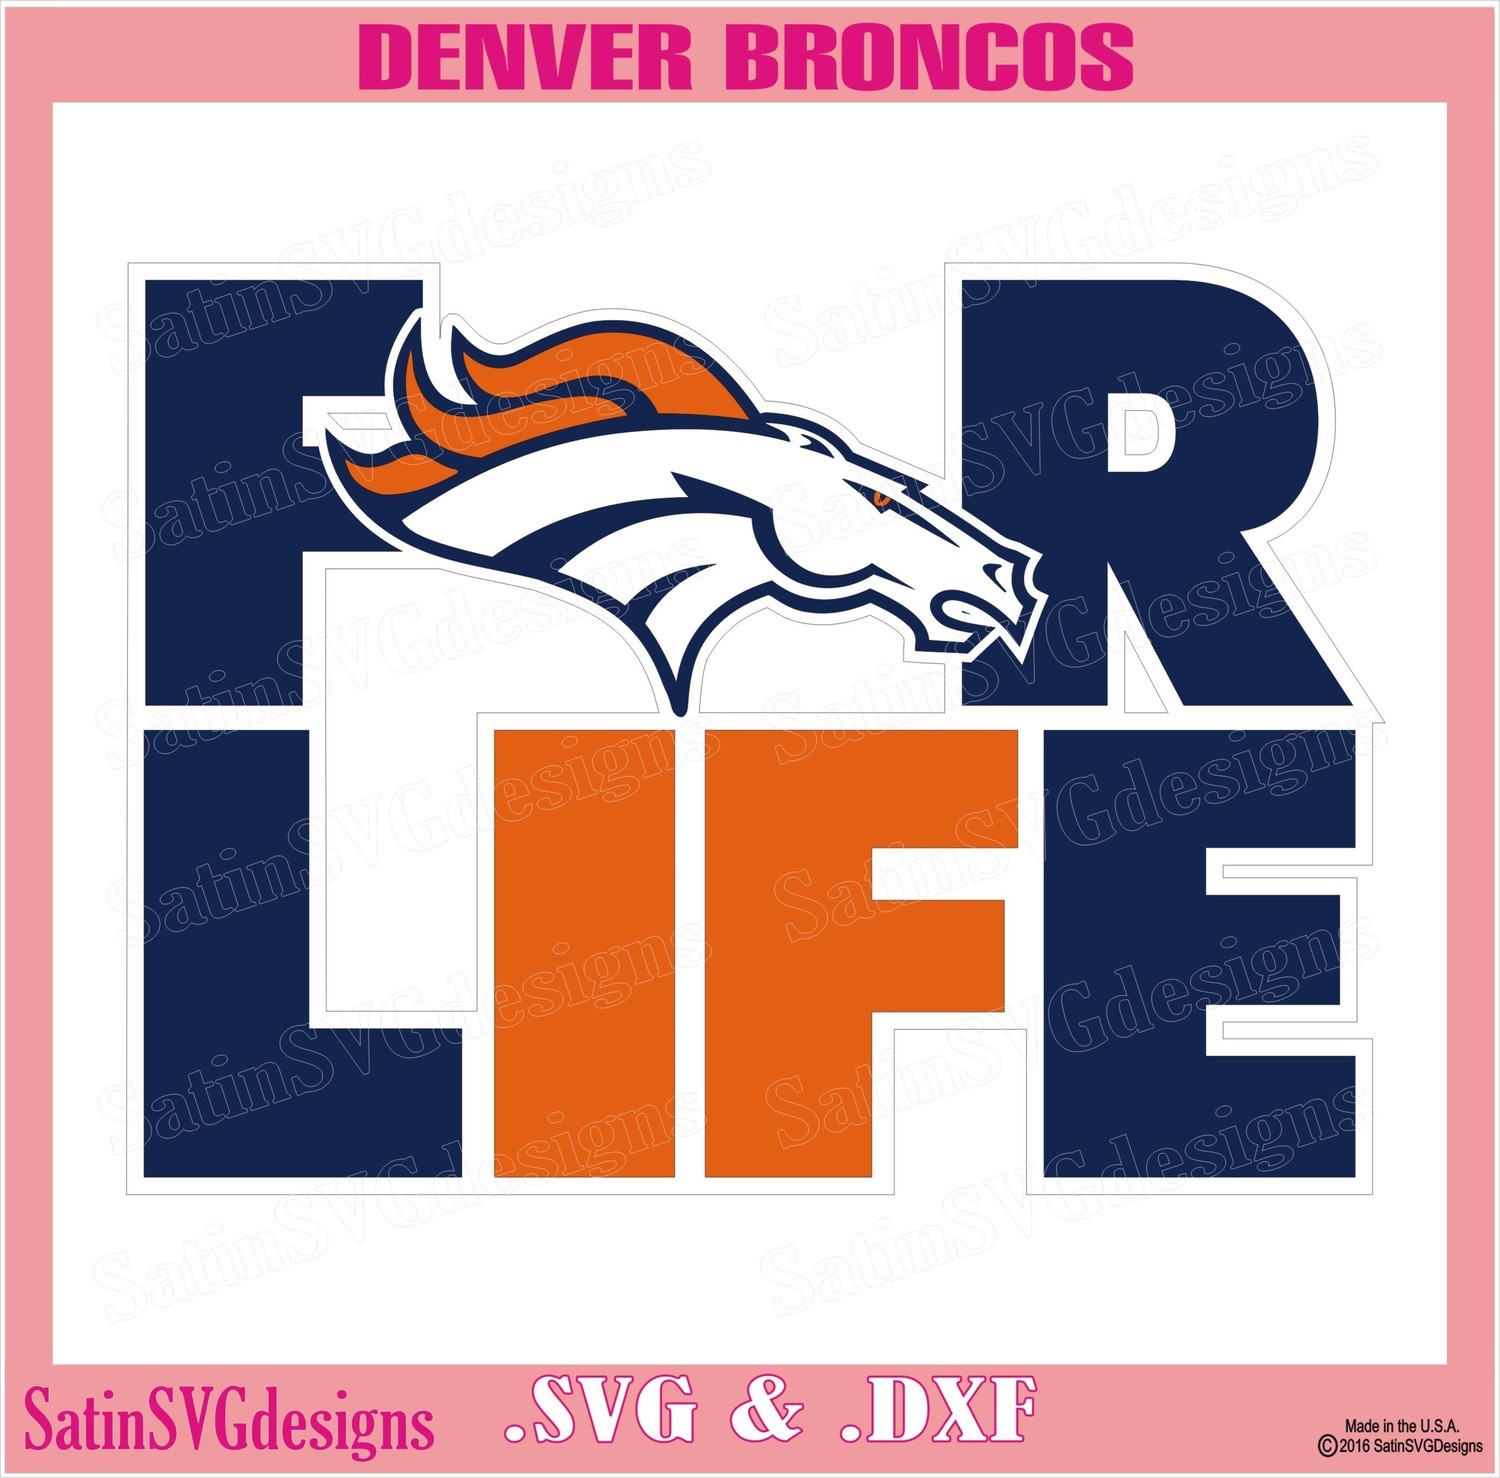 Denver Broncos 4Life Design SVG Files, Cricut, Silhouette Studio, Digital Cut Files